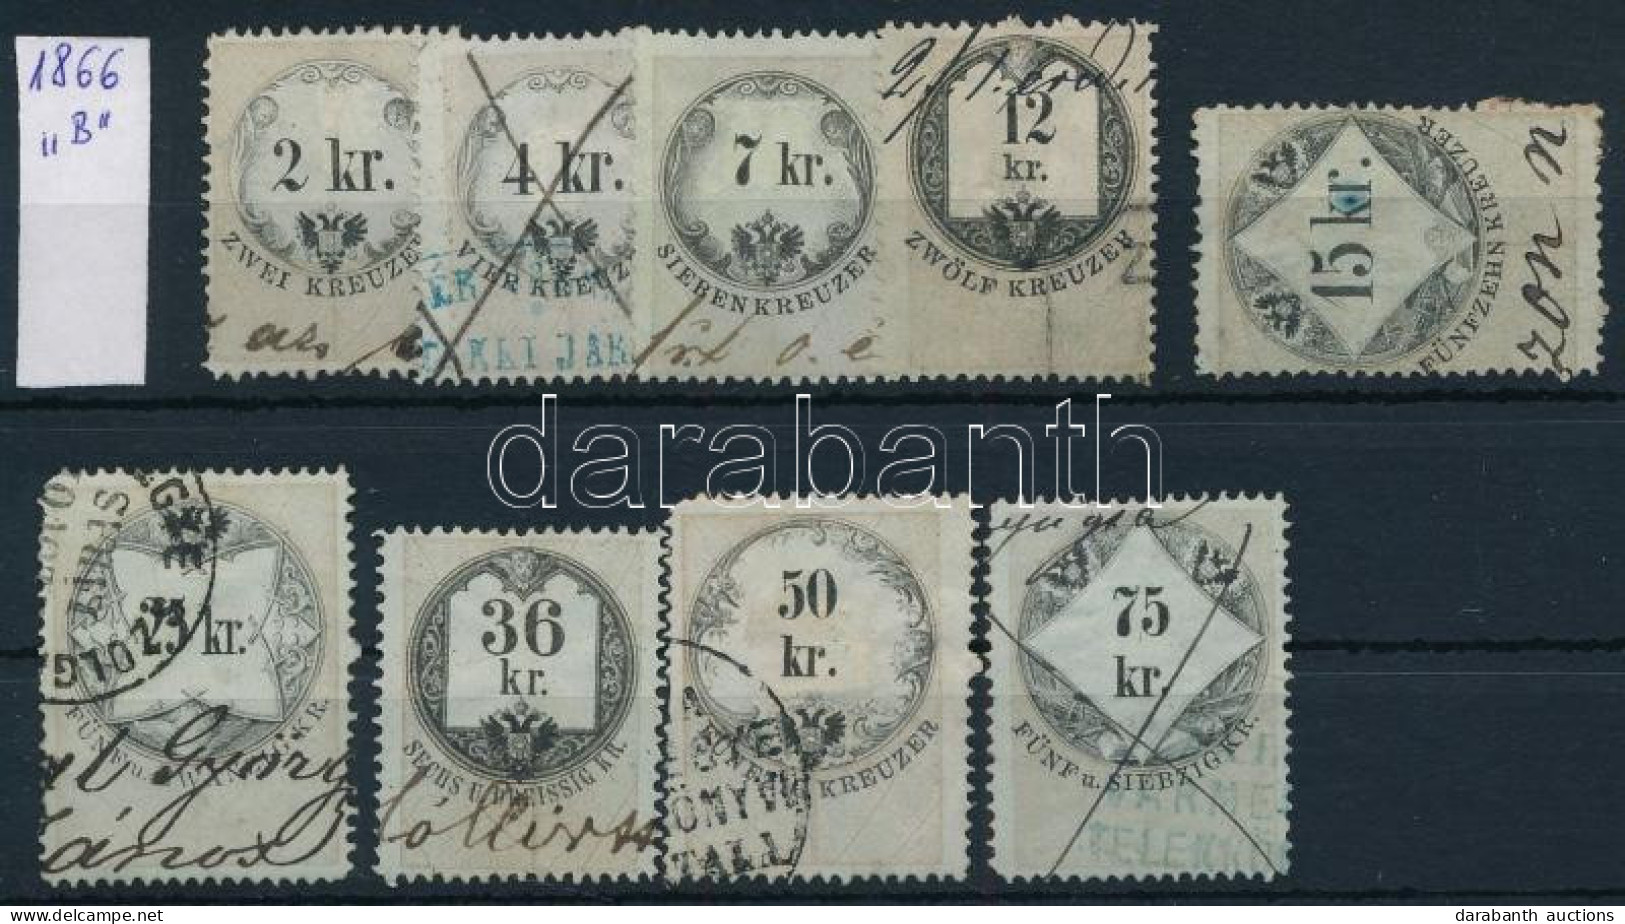 1866 9 Db Okmánybélyeg / Fiscal Stamps - Unclassified